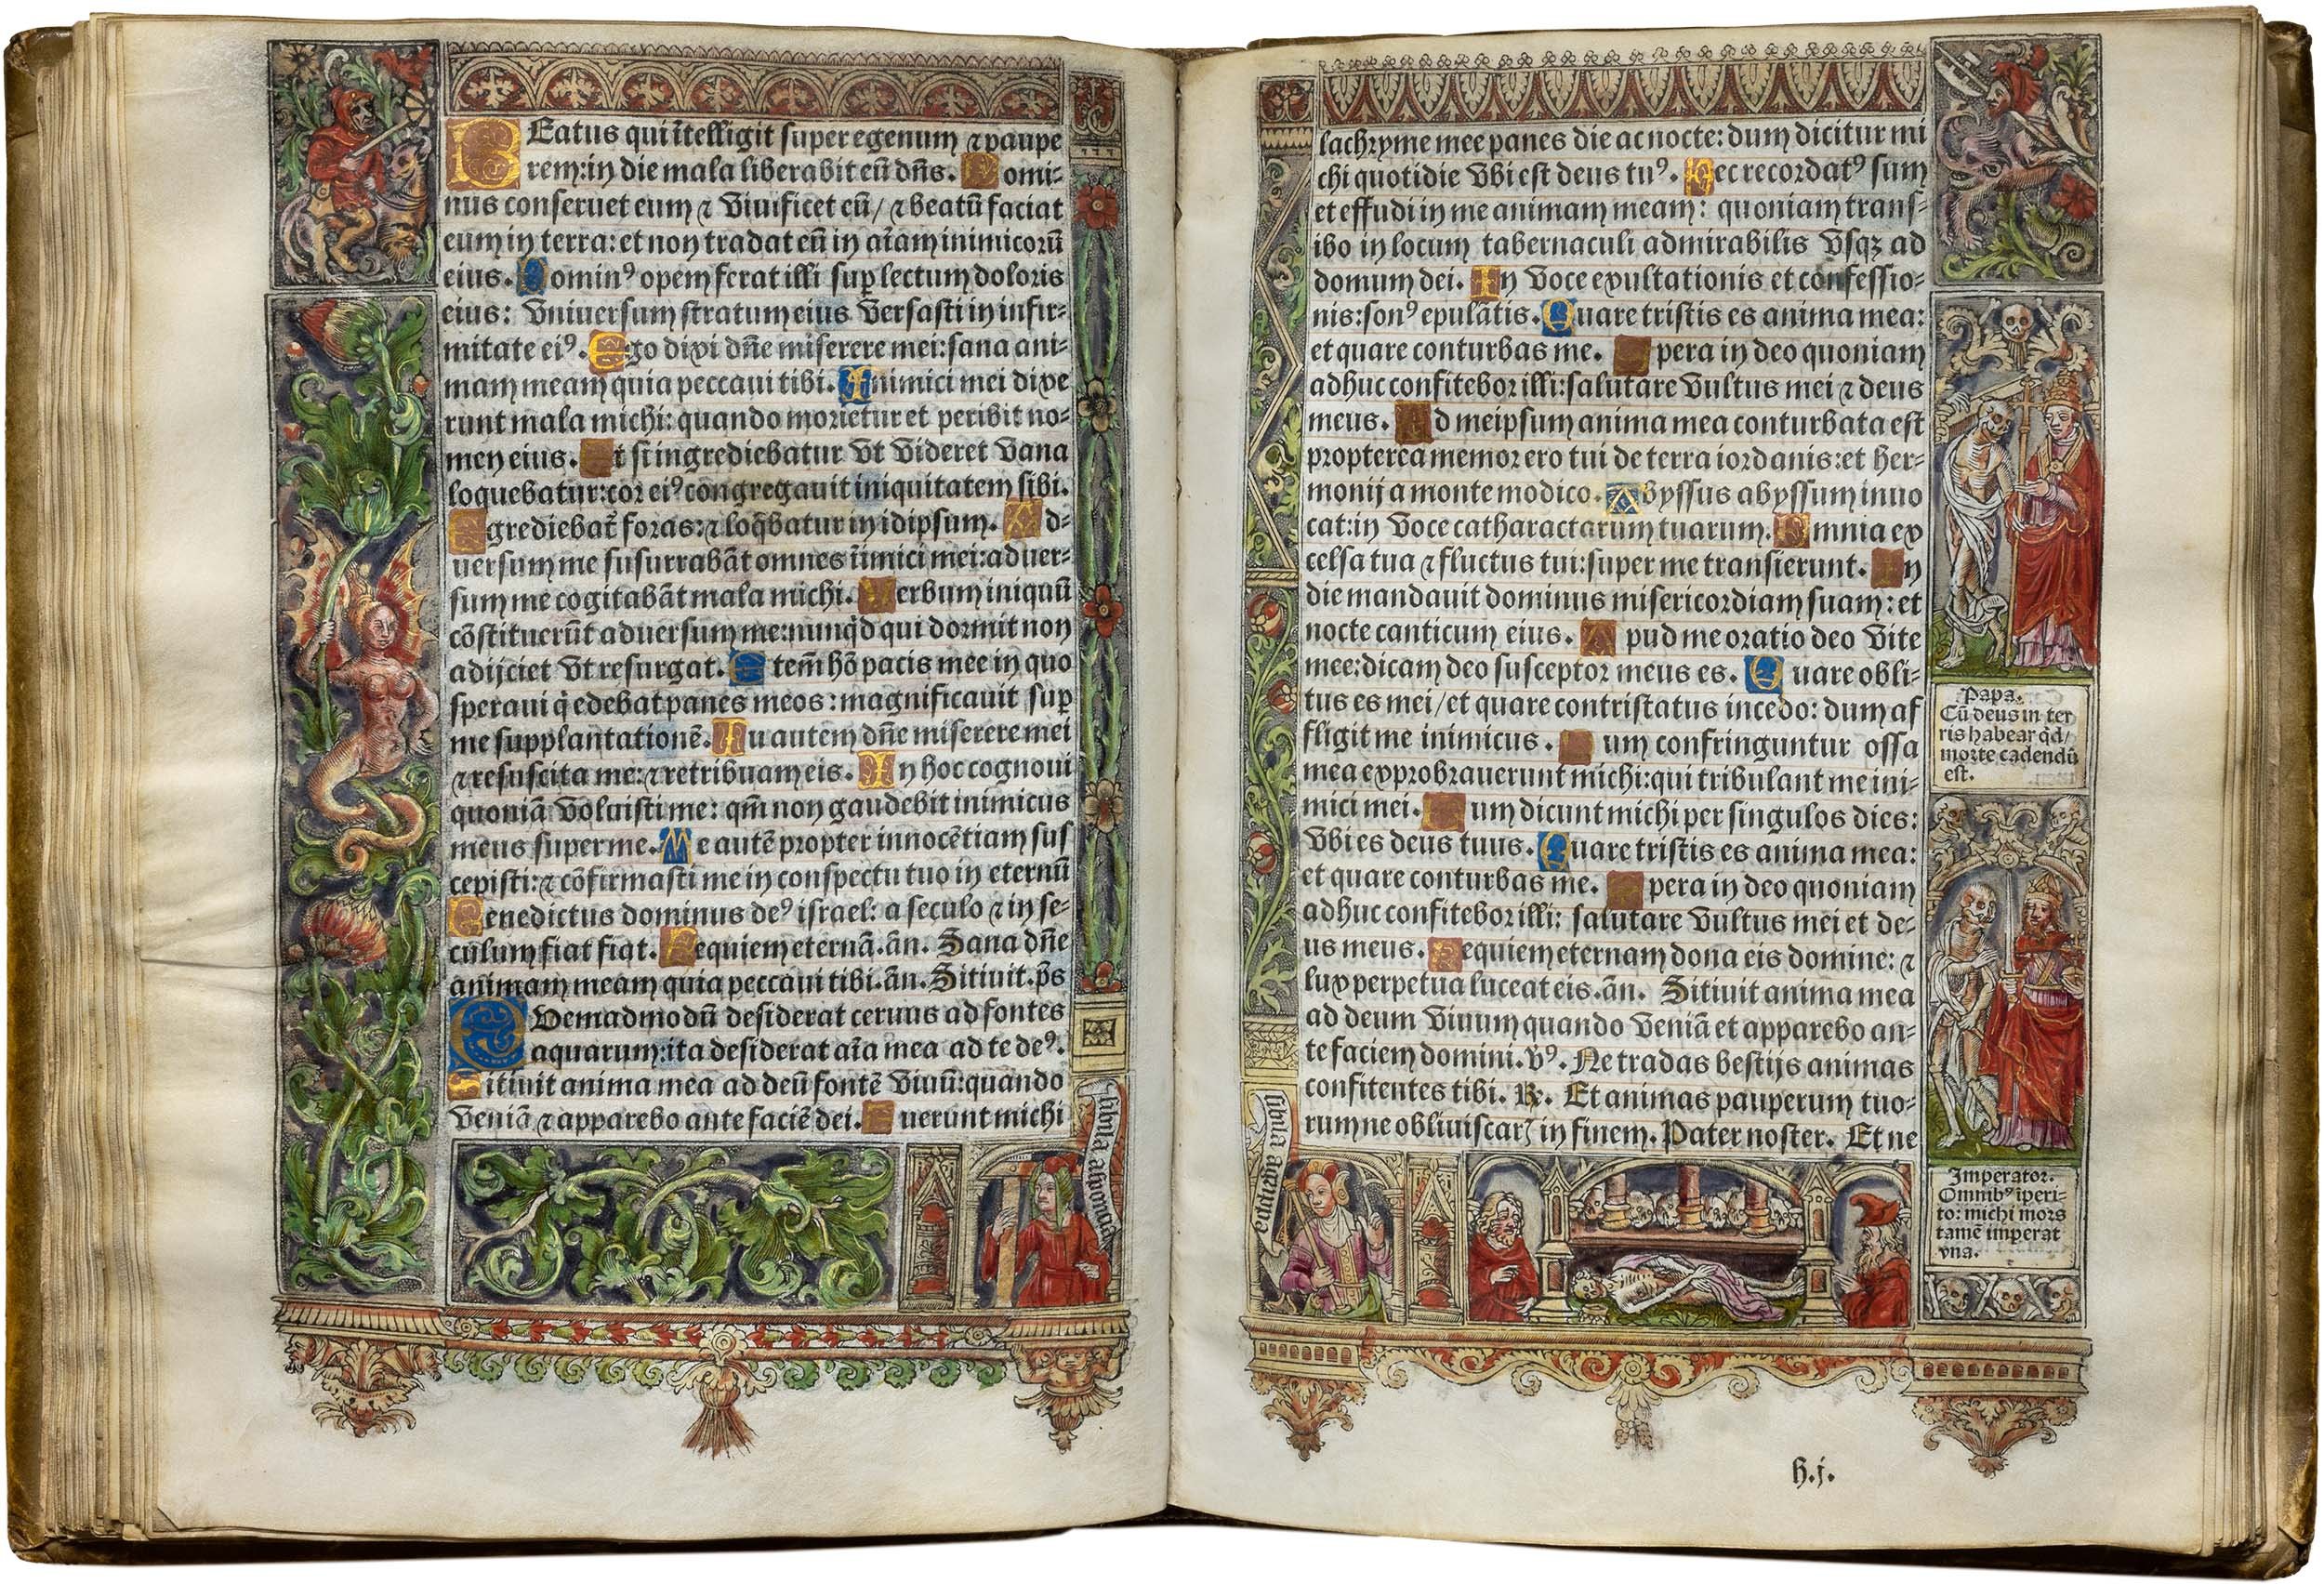 Horae-bmv-31-march-1511-kerver-printed-book-of-hours-illuminated-copy-vellum-60.jpg